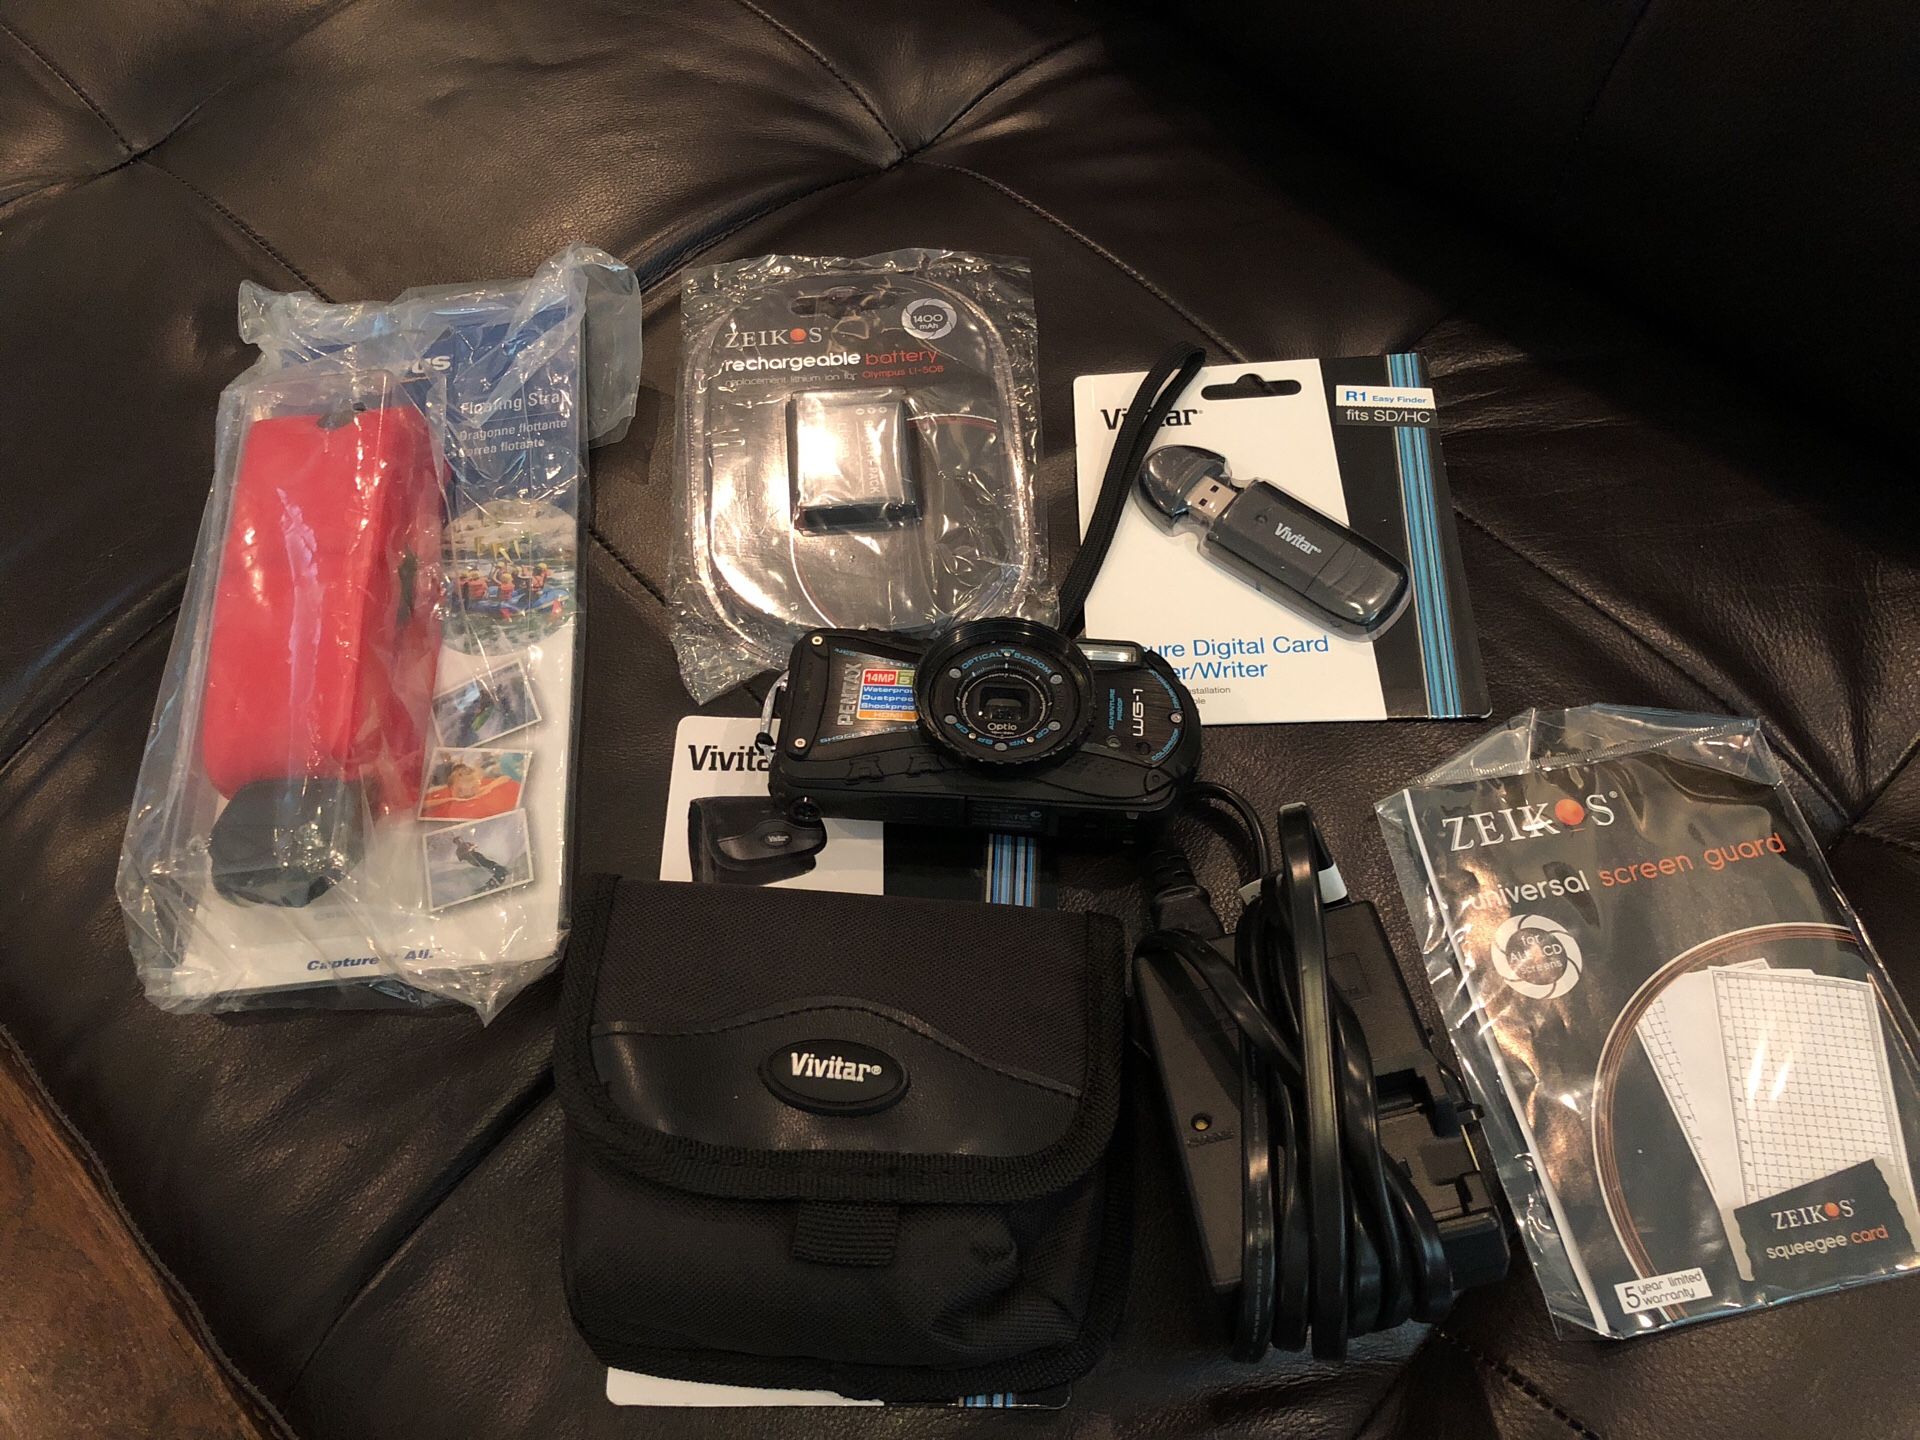 Pentax digital camera and accessory bundle